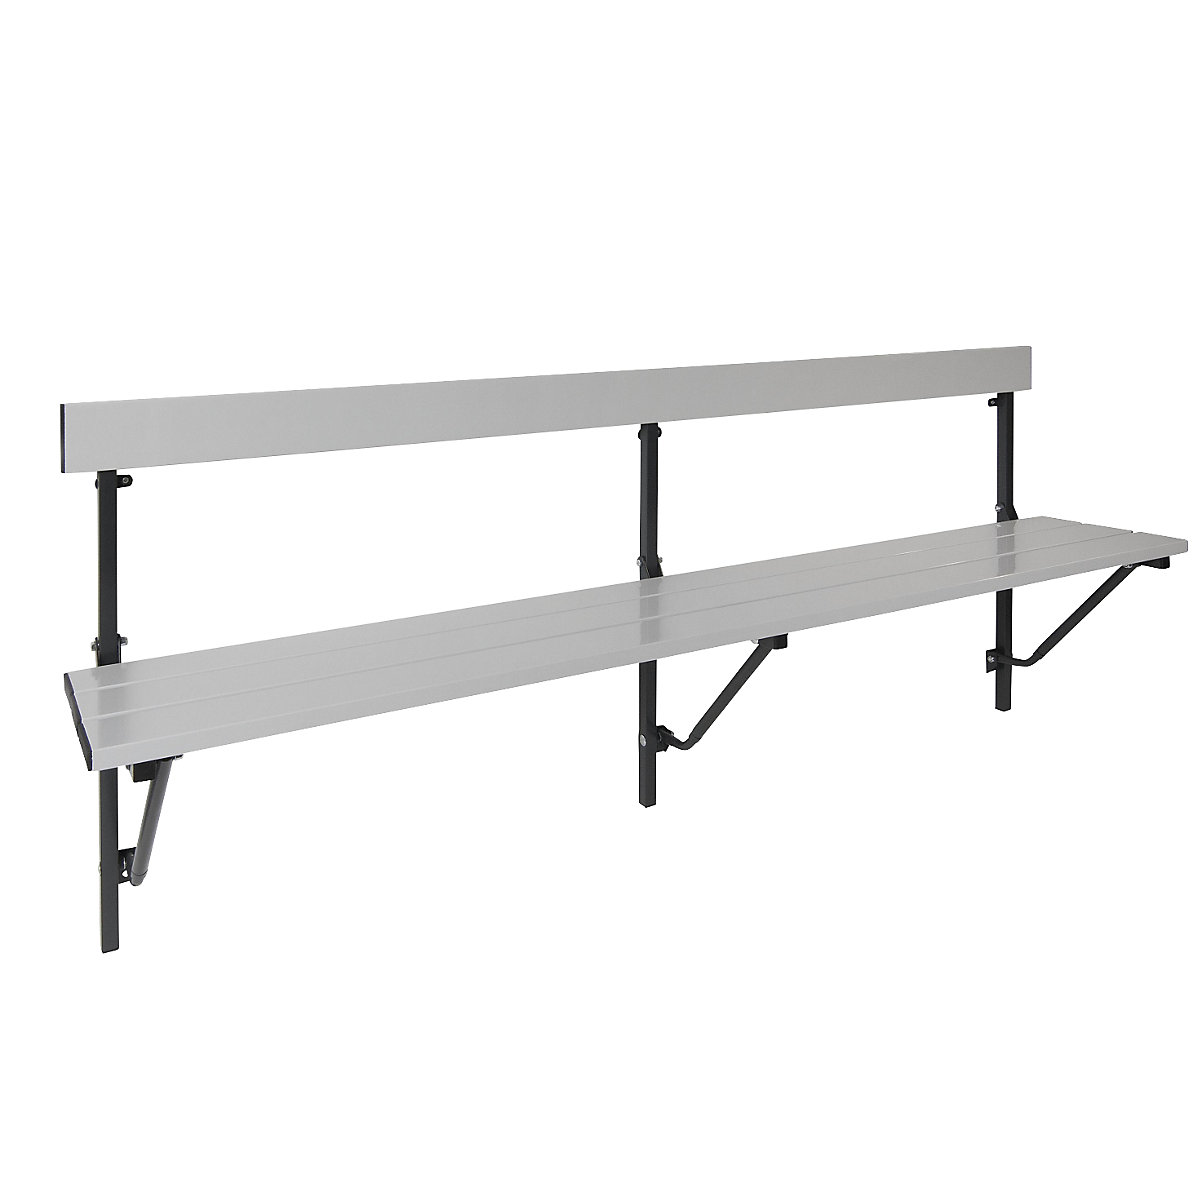 Sypro – Folding wall-mounted bench, folding, length up to 2000 mm, with aluminium slats